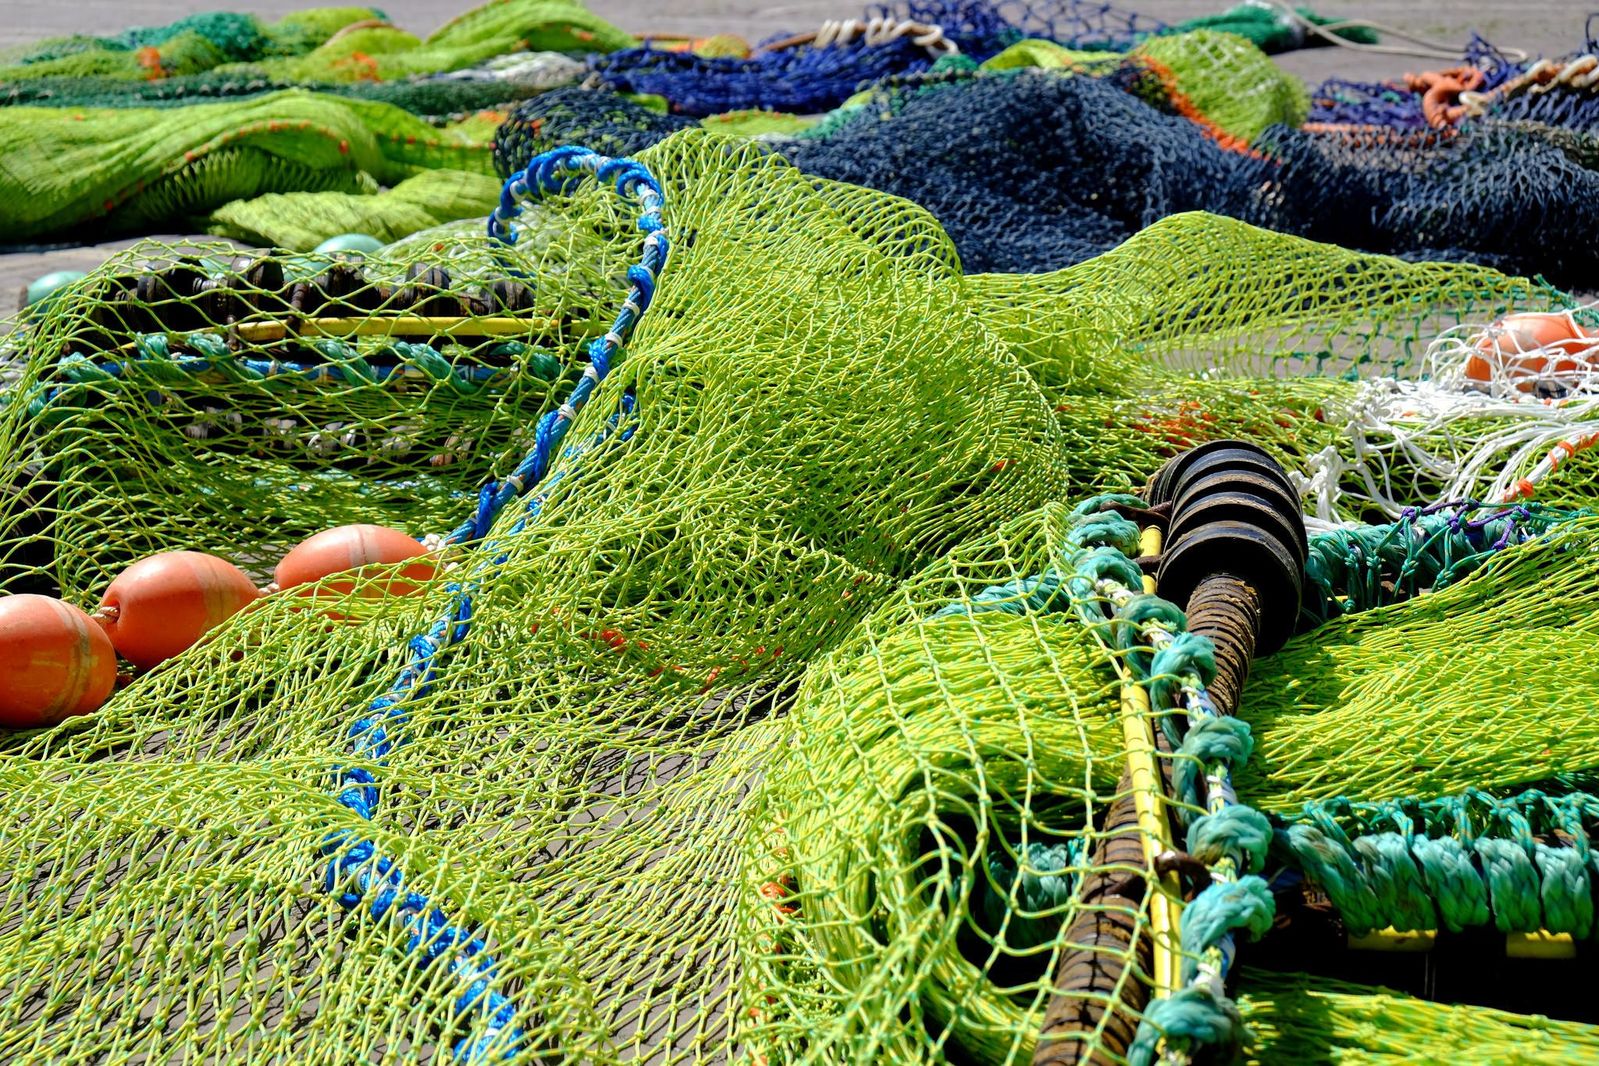 Global Fishing Fleets Waste Ten Percent of Catch, Smart News